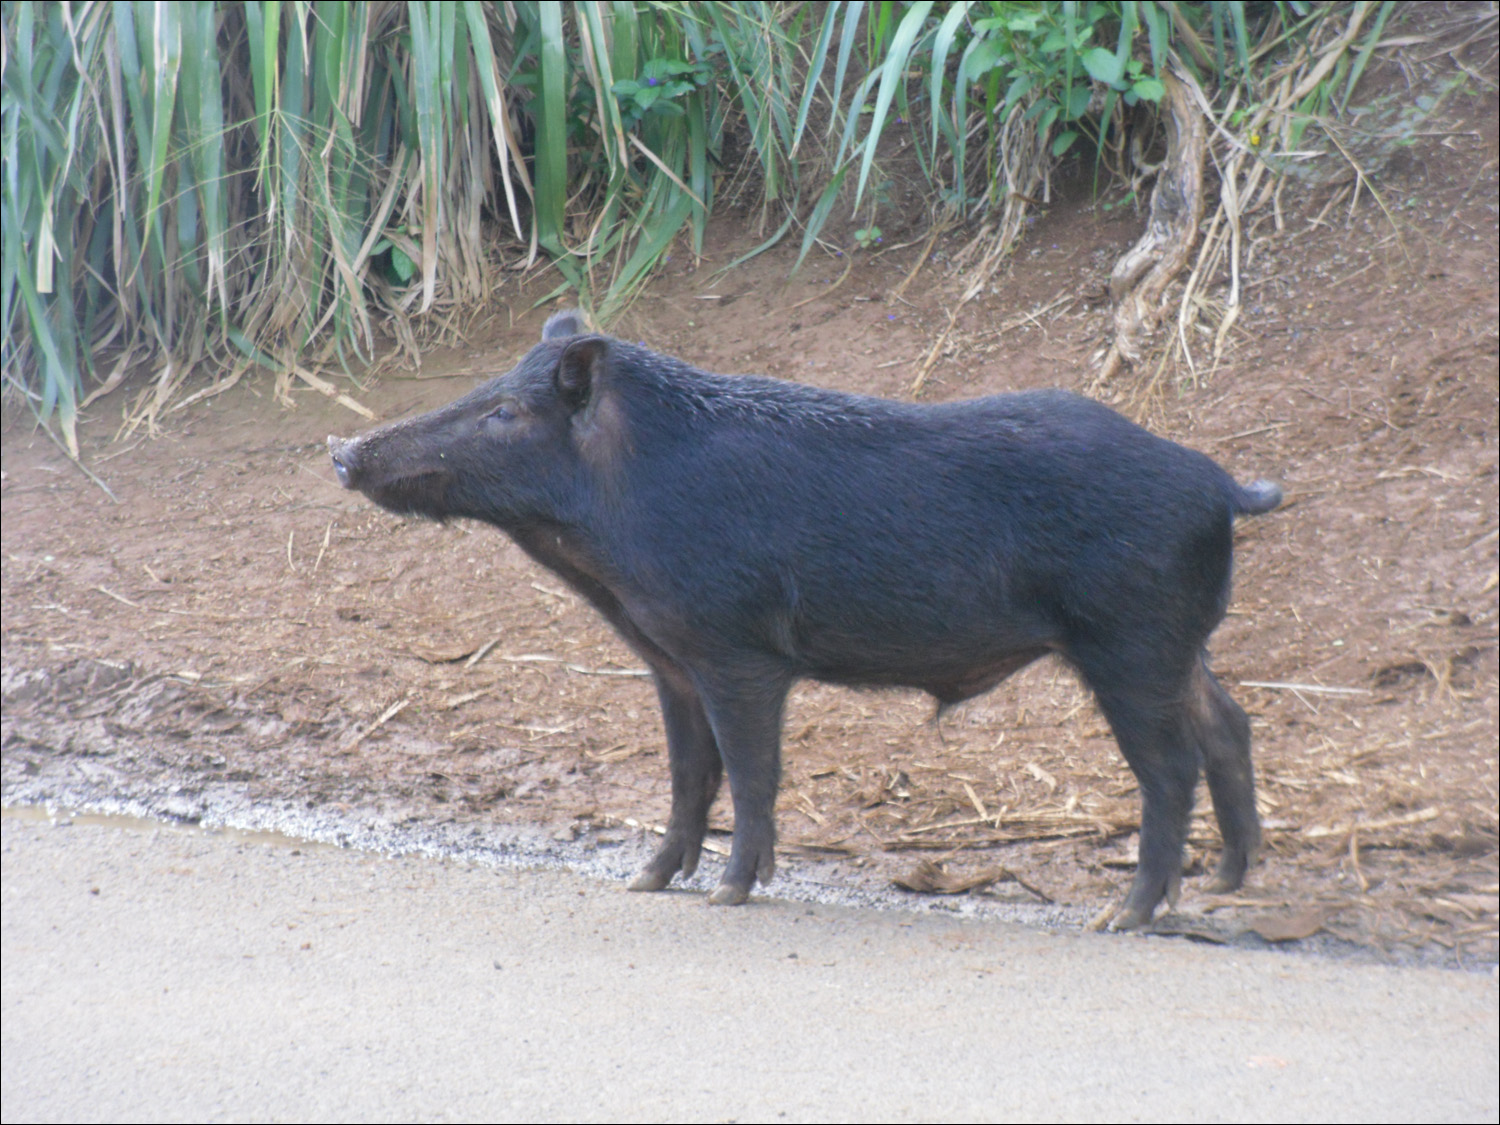 Wild pig near Wailua falls.